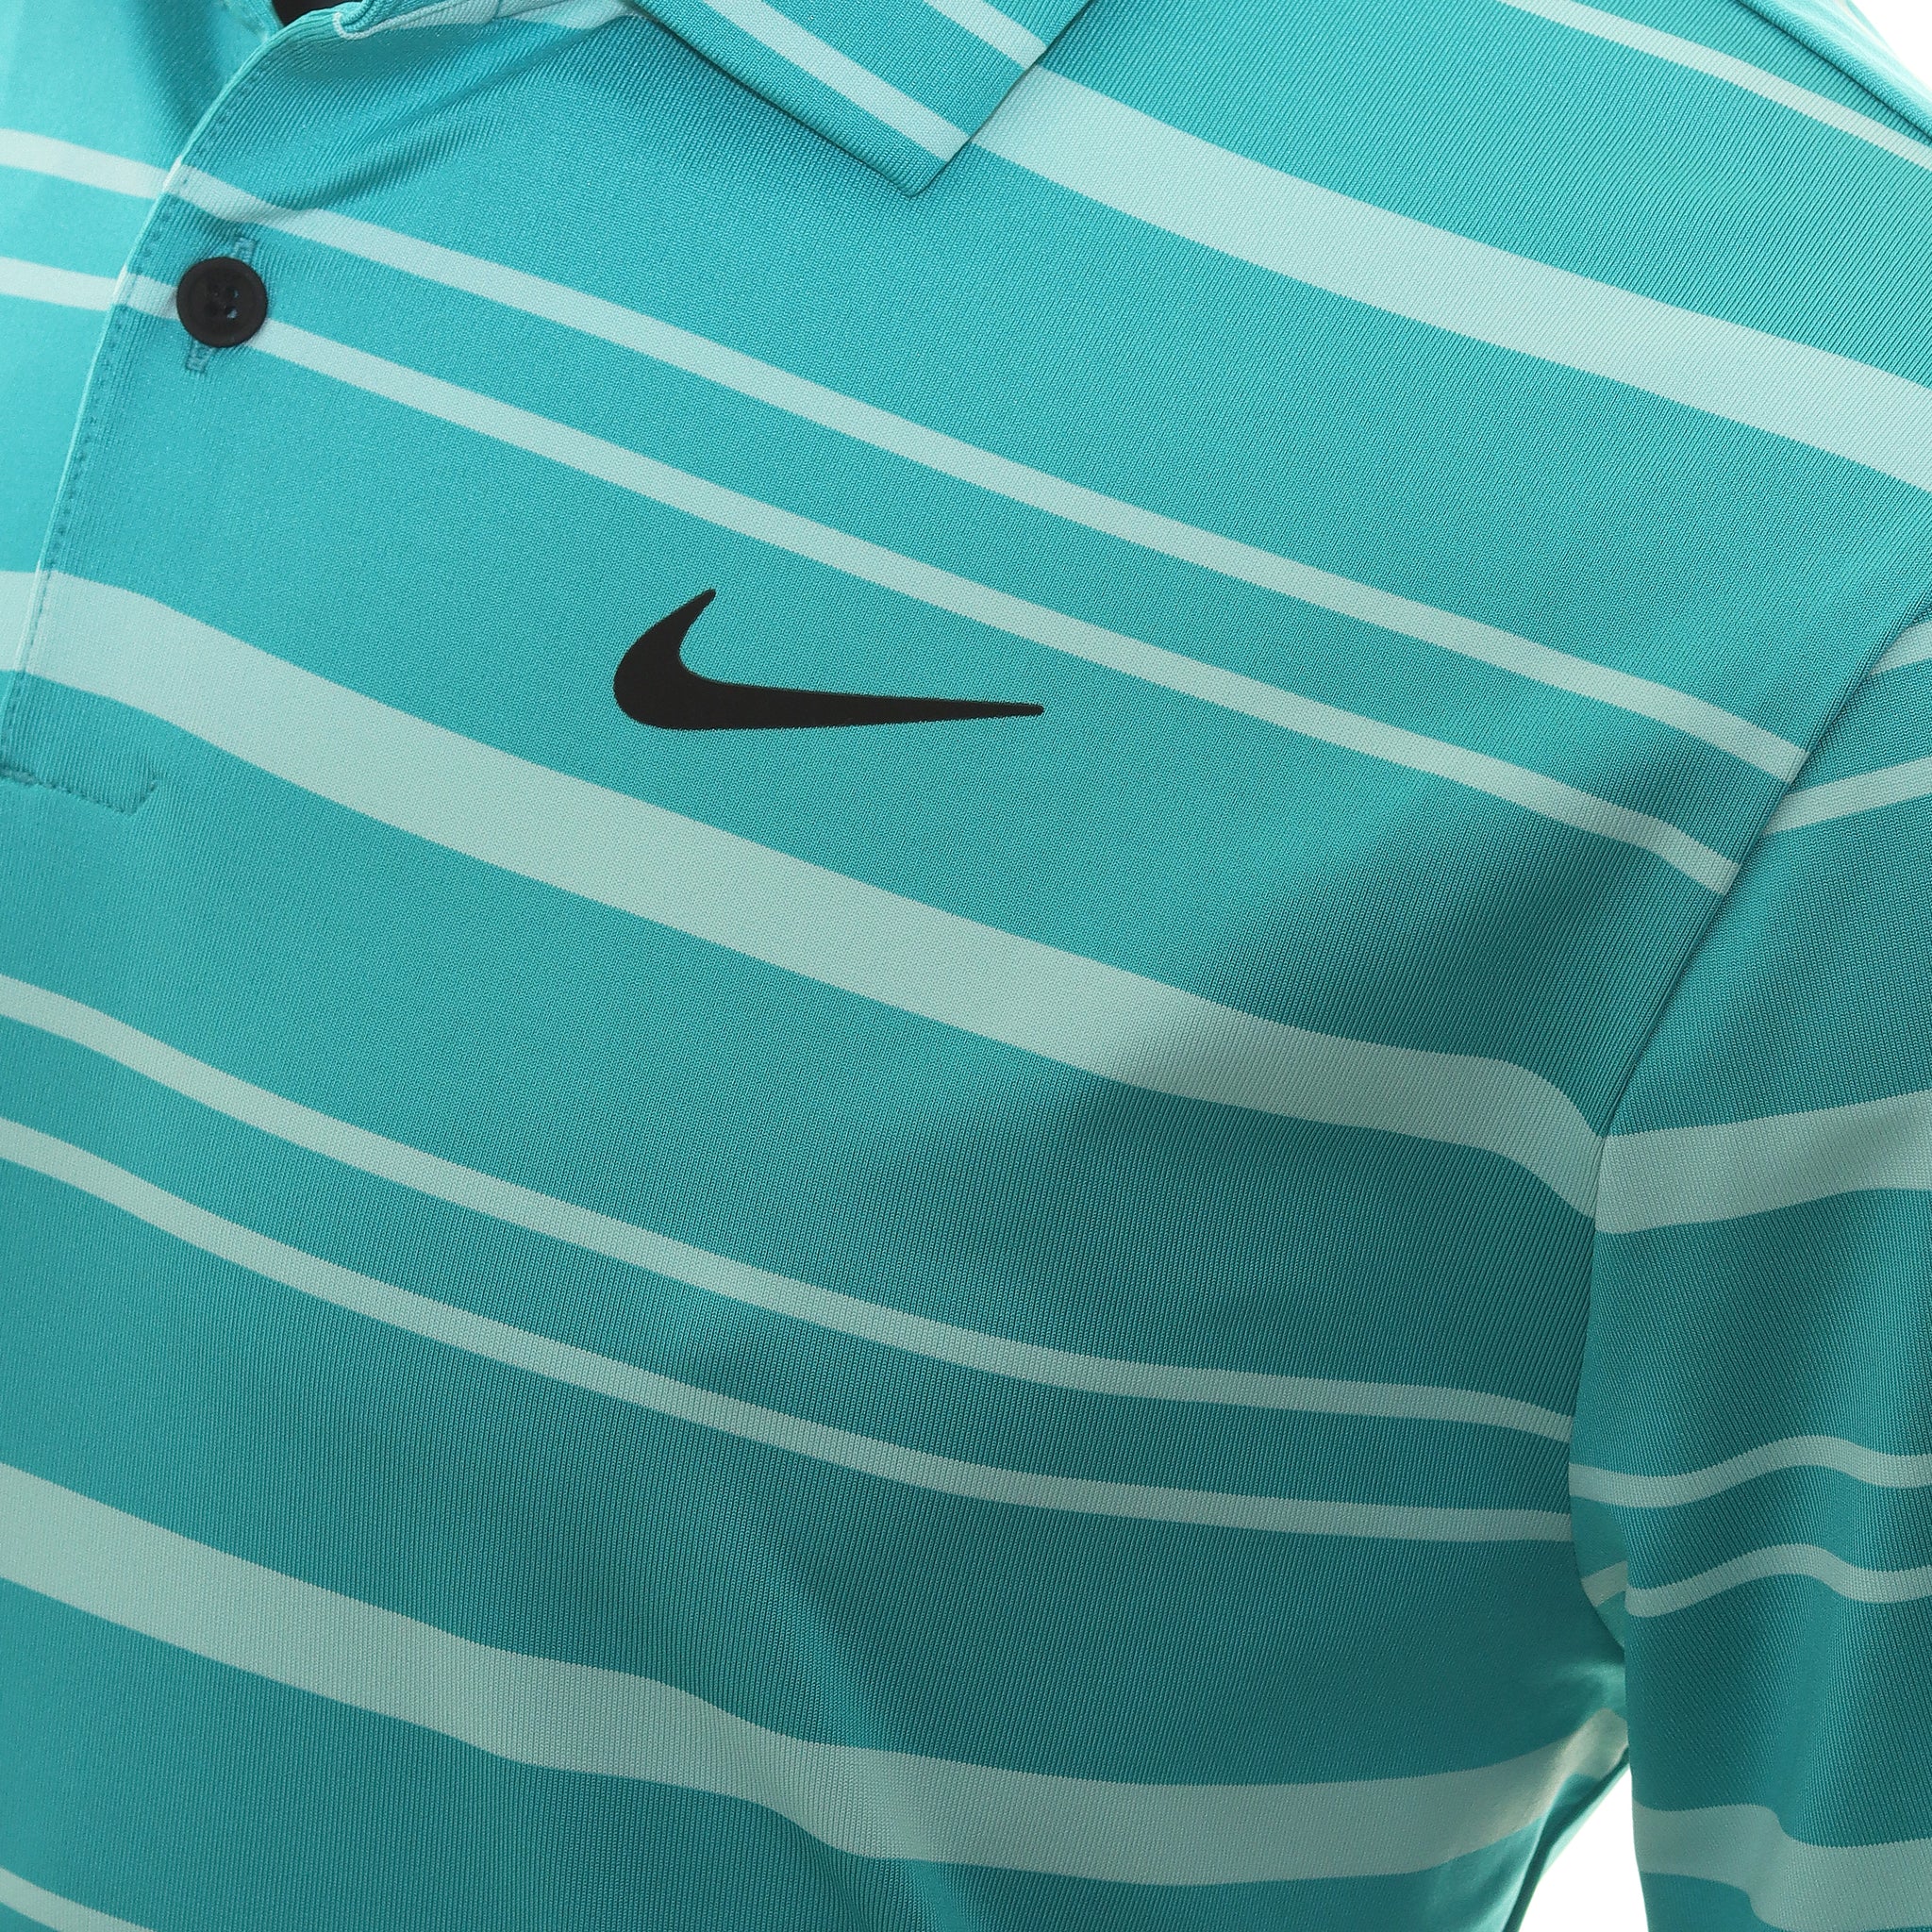 nike-golf-dri-fit-tour-stripe-shirt-dr5300-teal-nebula-367-function18